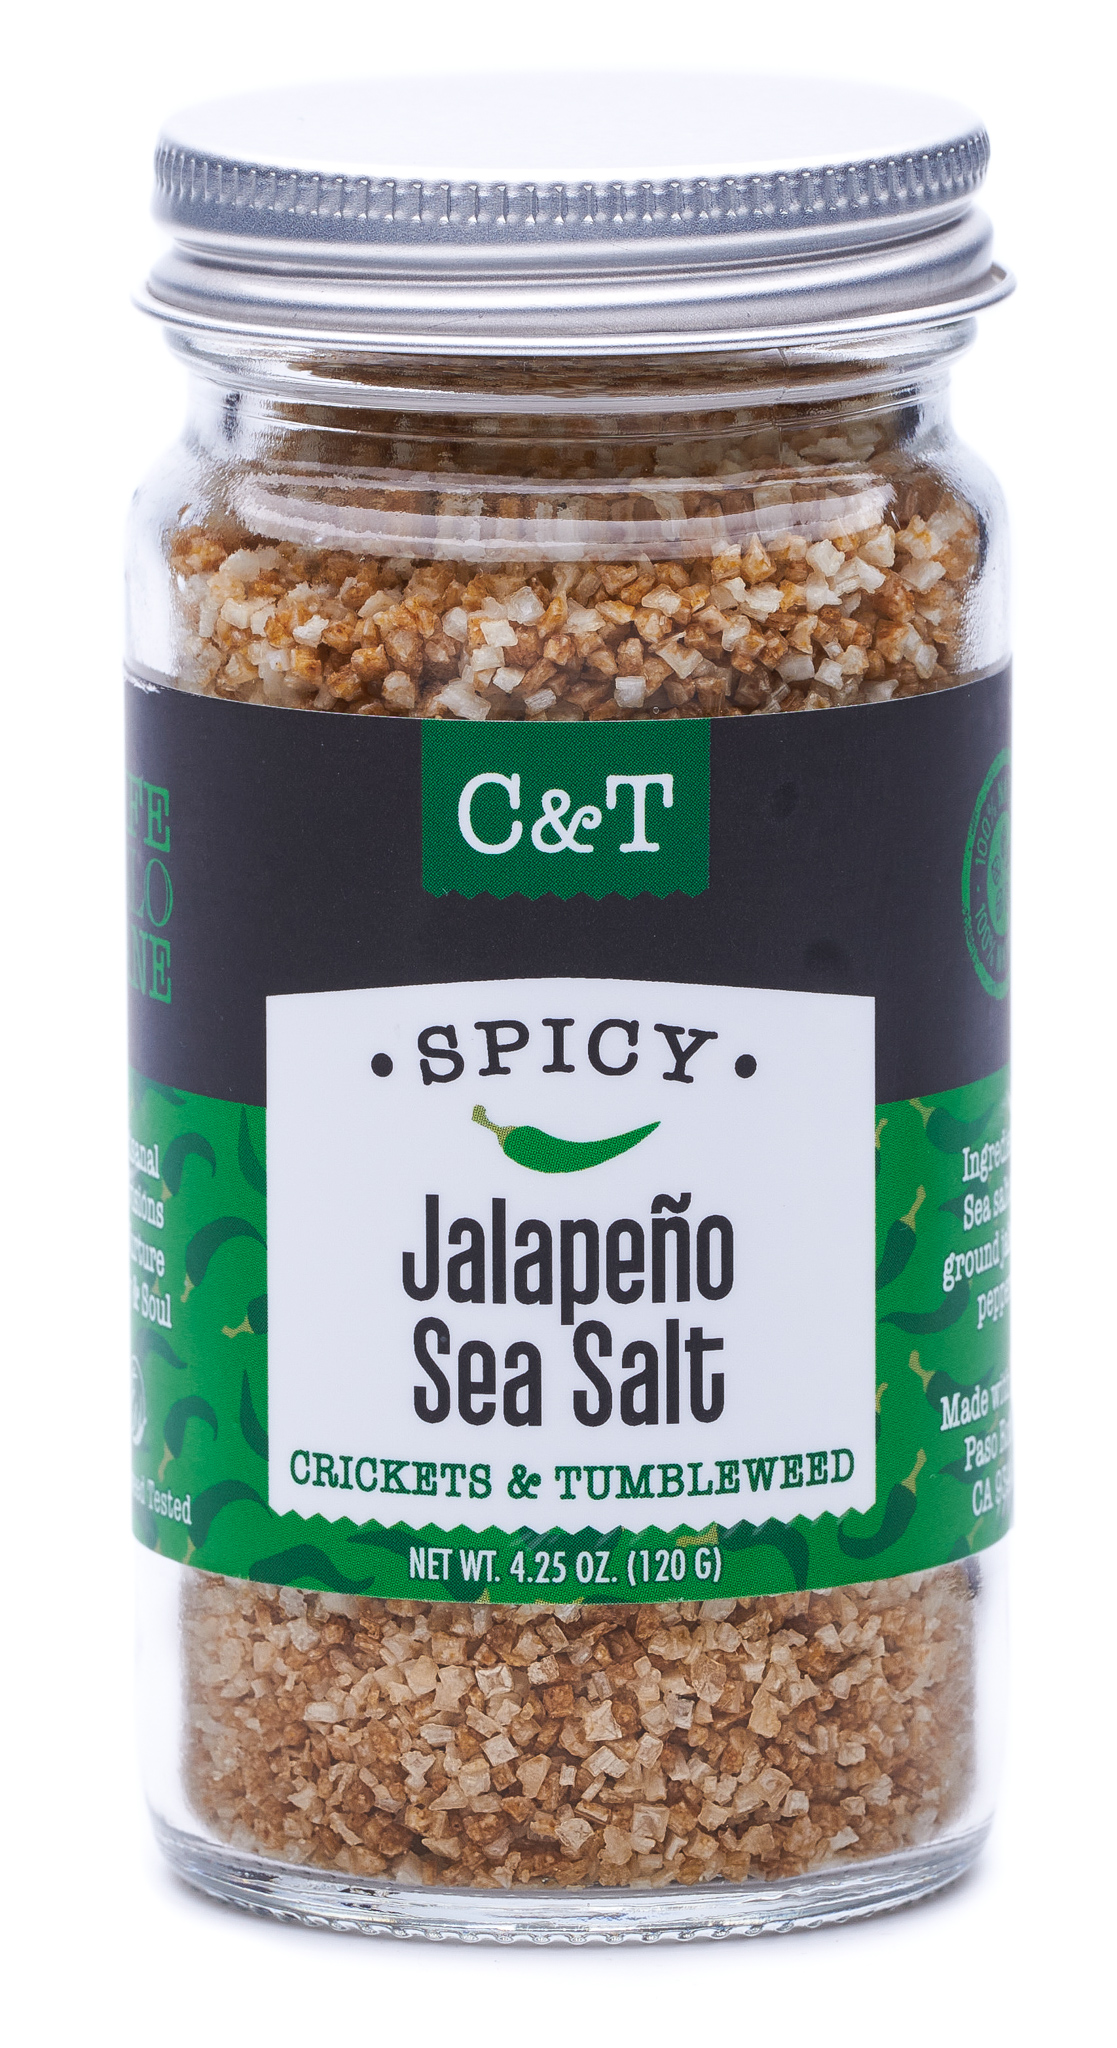 Product Image for C&T Sea Salt Jalapeño